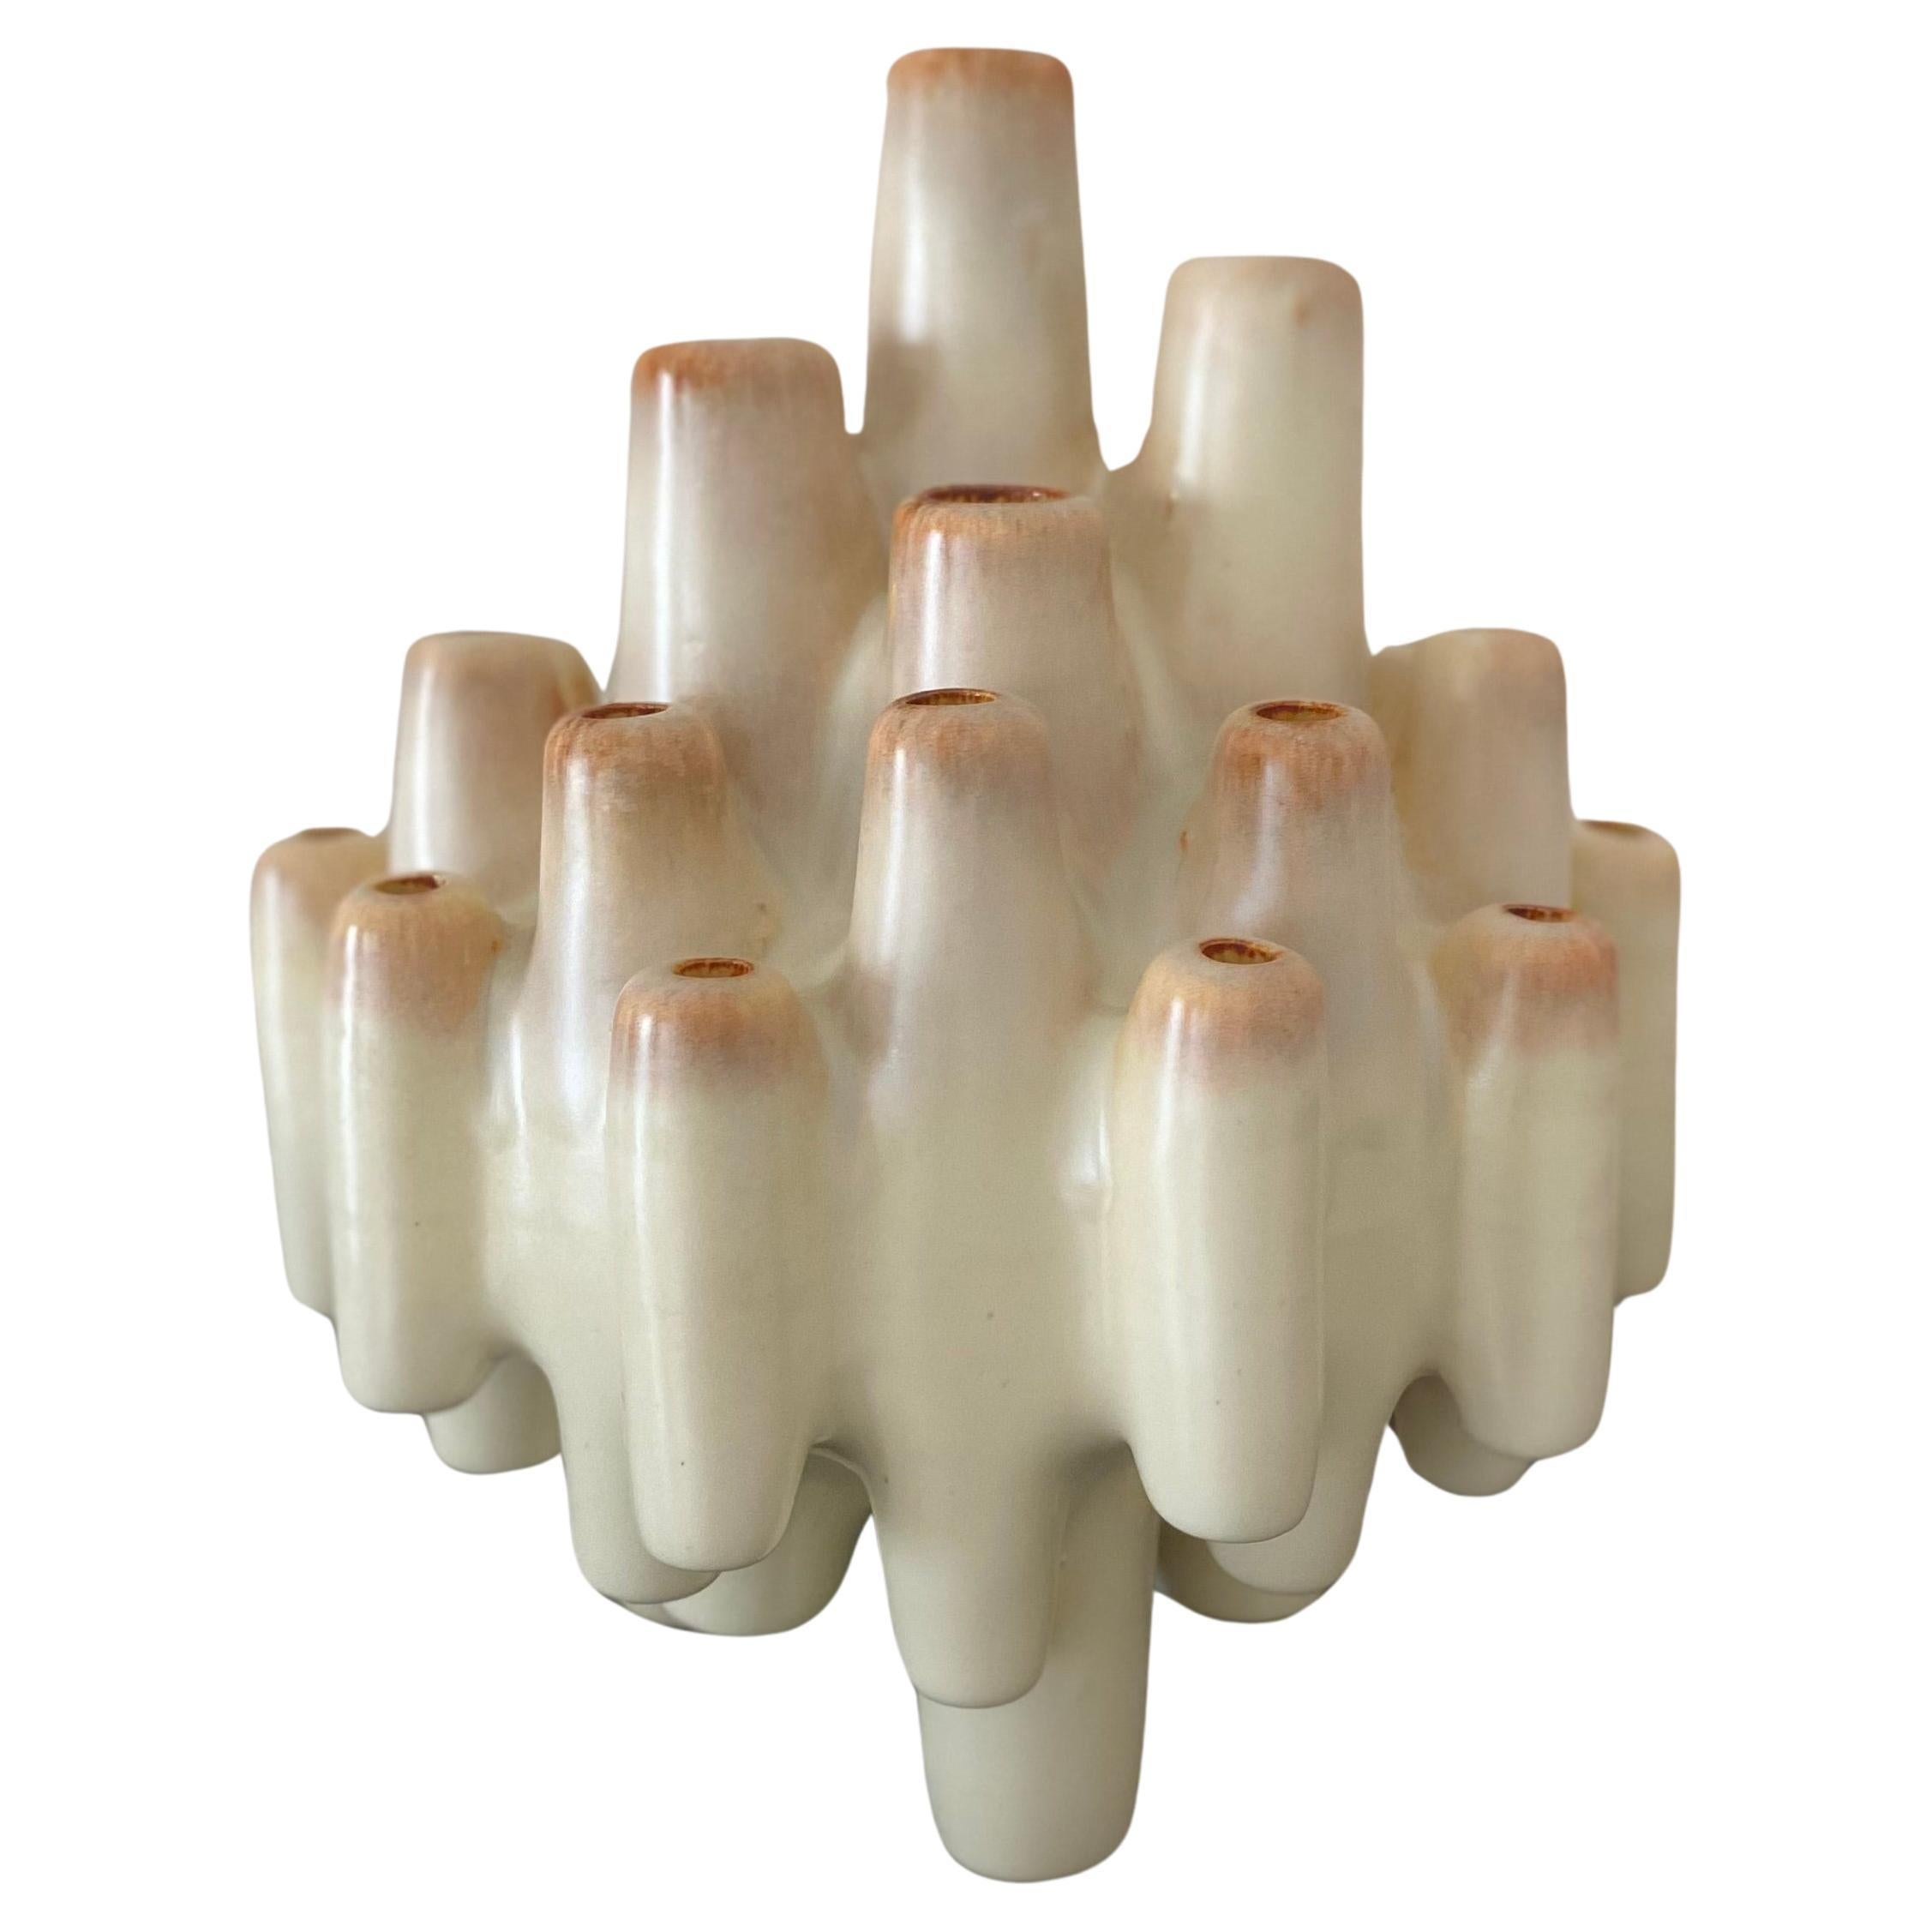 Beige Sculptural Italian Ceramic Vase by Bertoncello, coral/chimney shape